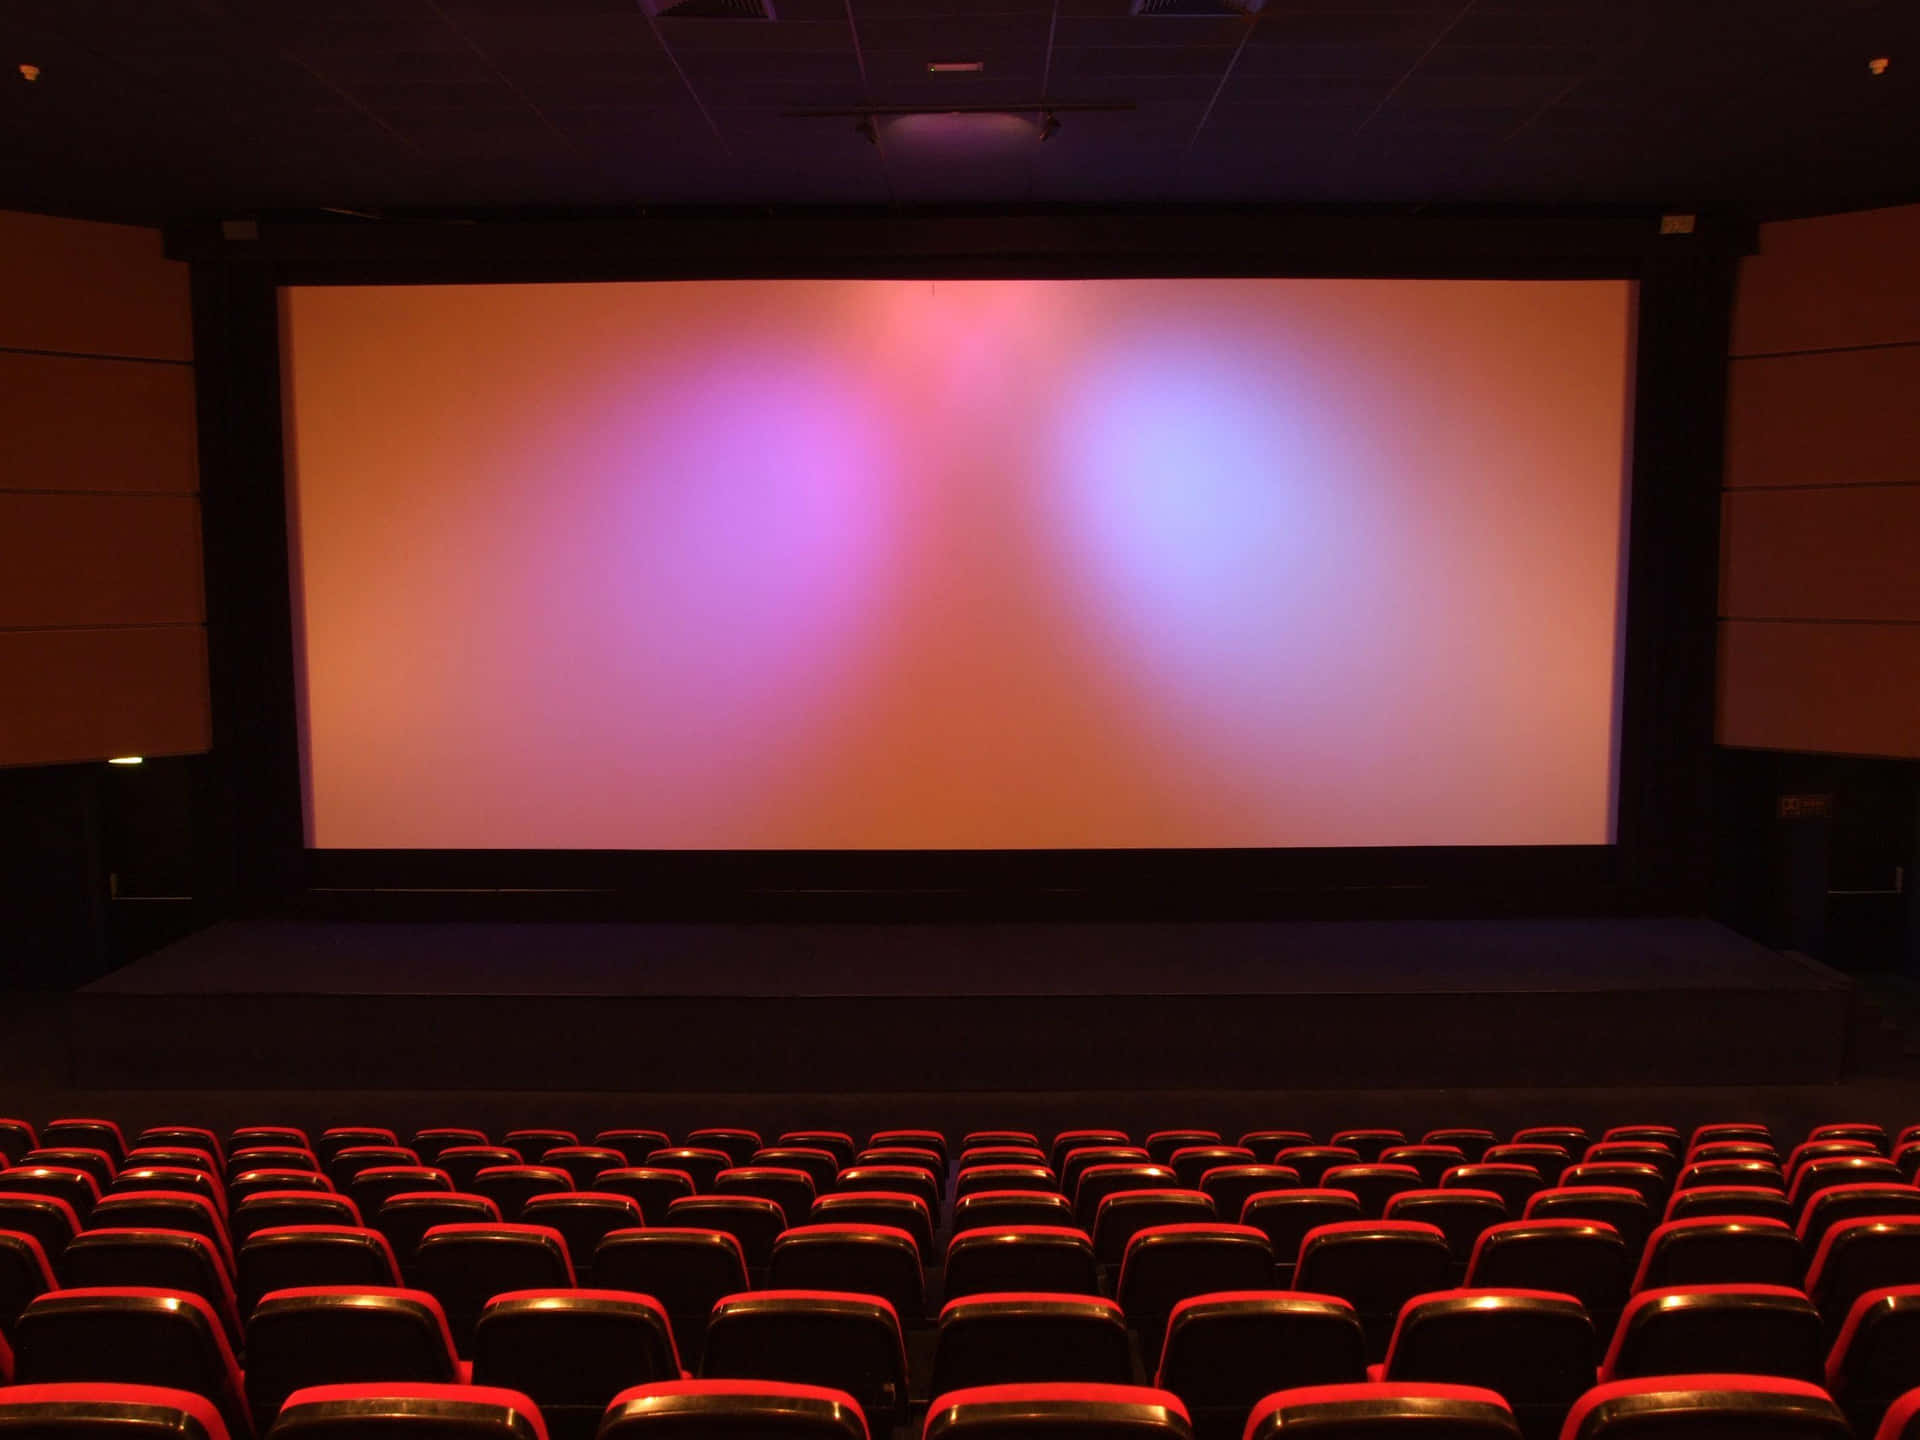 Empty Cinema Hall Red Seats Background